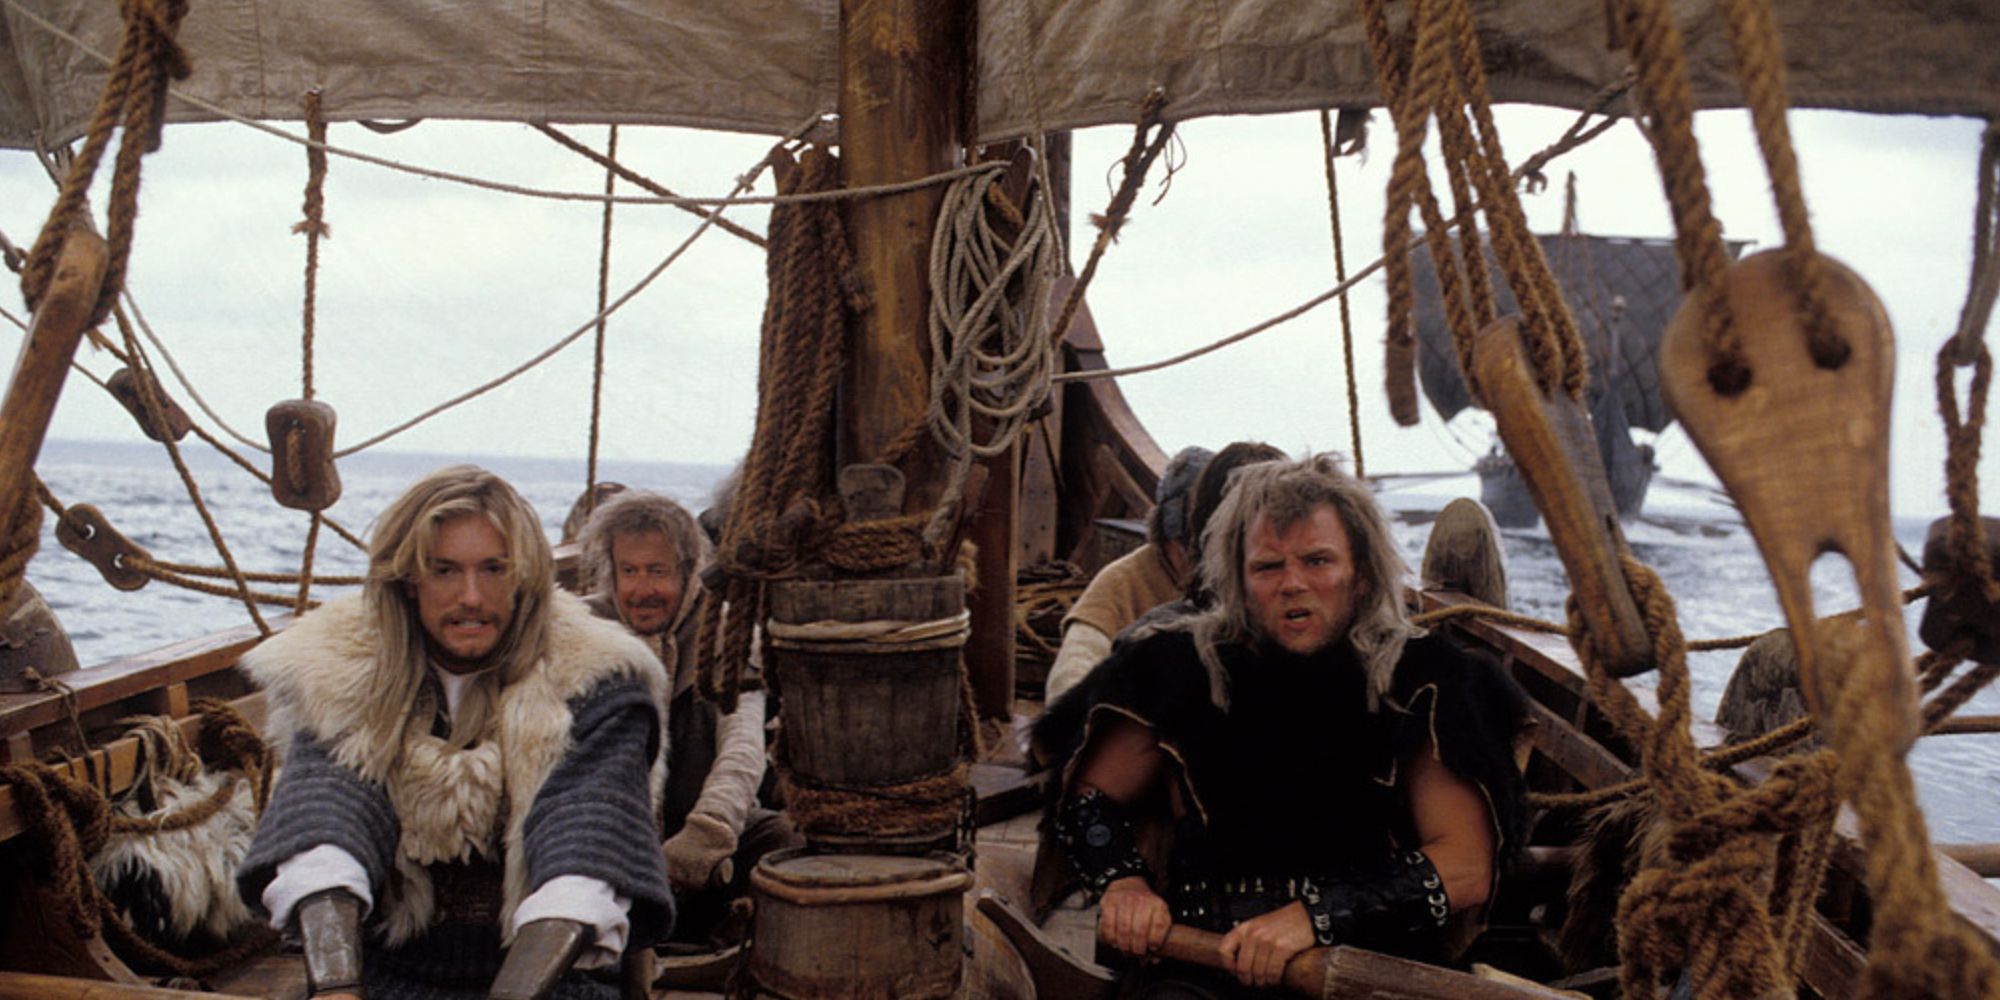 Vikings rowing on a boar in the 1989 movie Erik the Viking